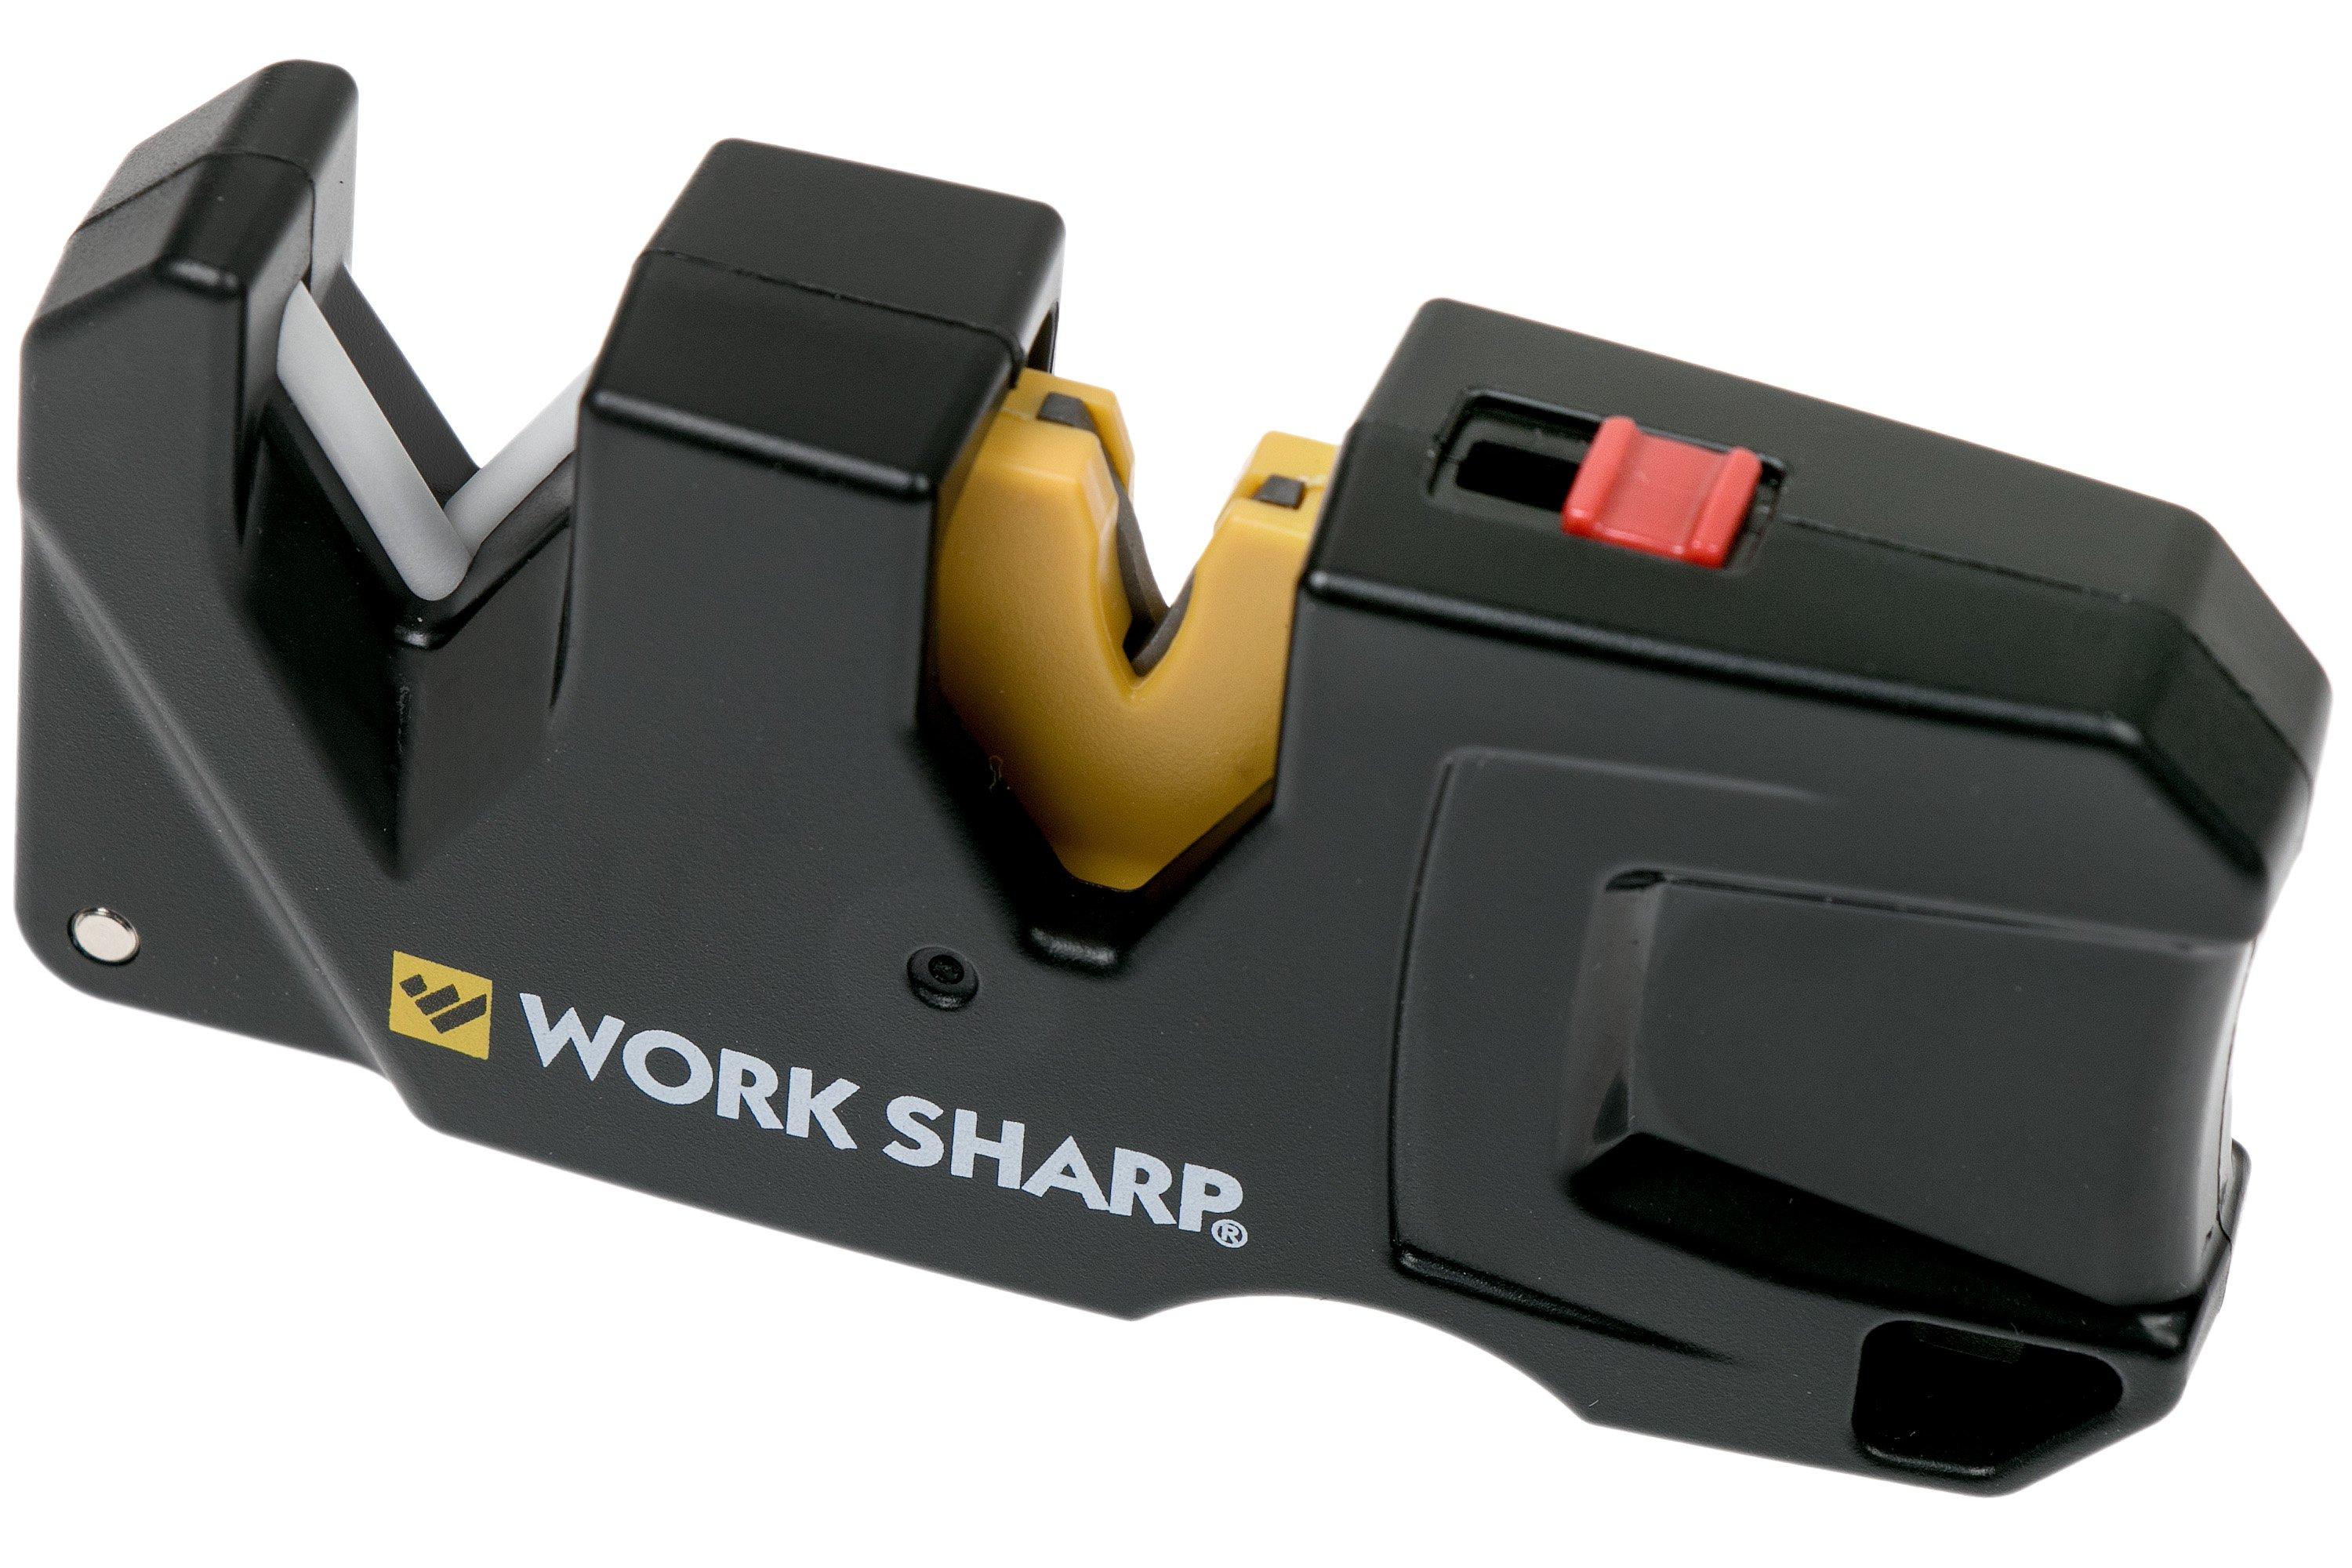  Work Sharp Compact Pivot Plus Knife Sharpener, Compact